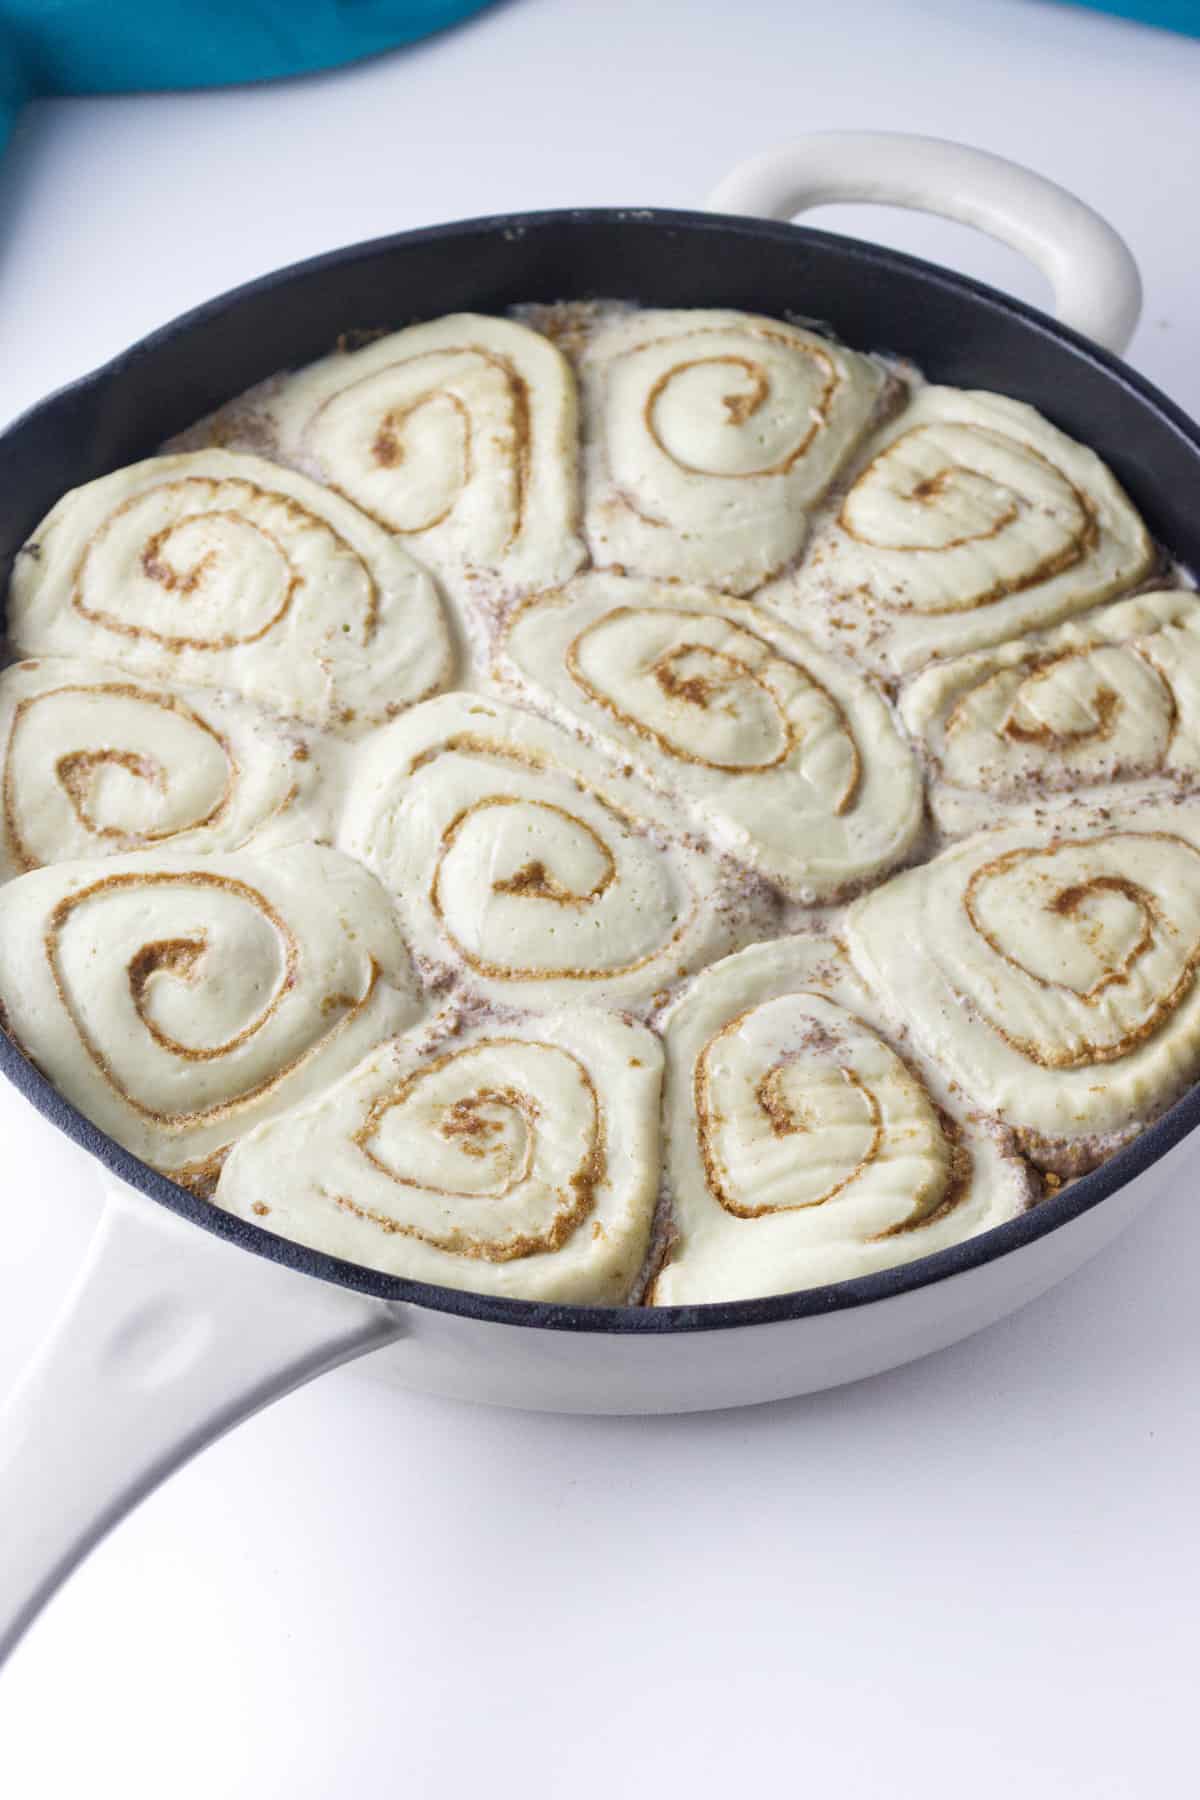 pan of risen cinnamon rolls.